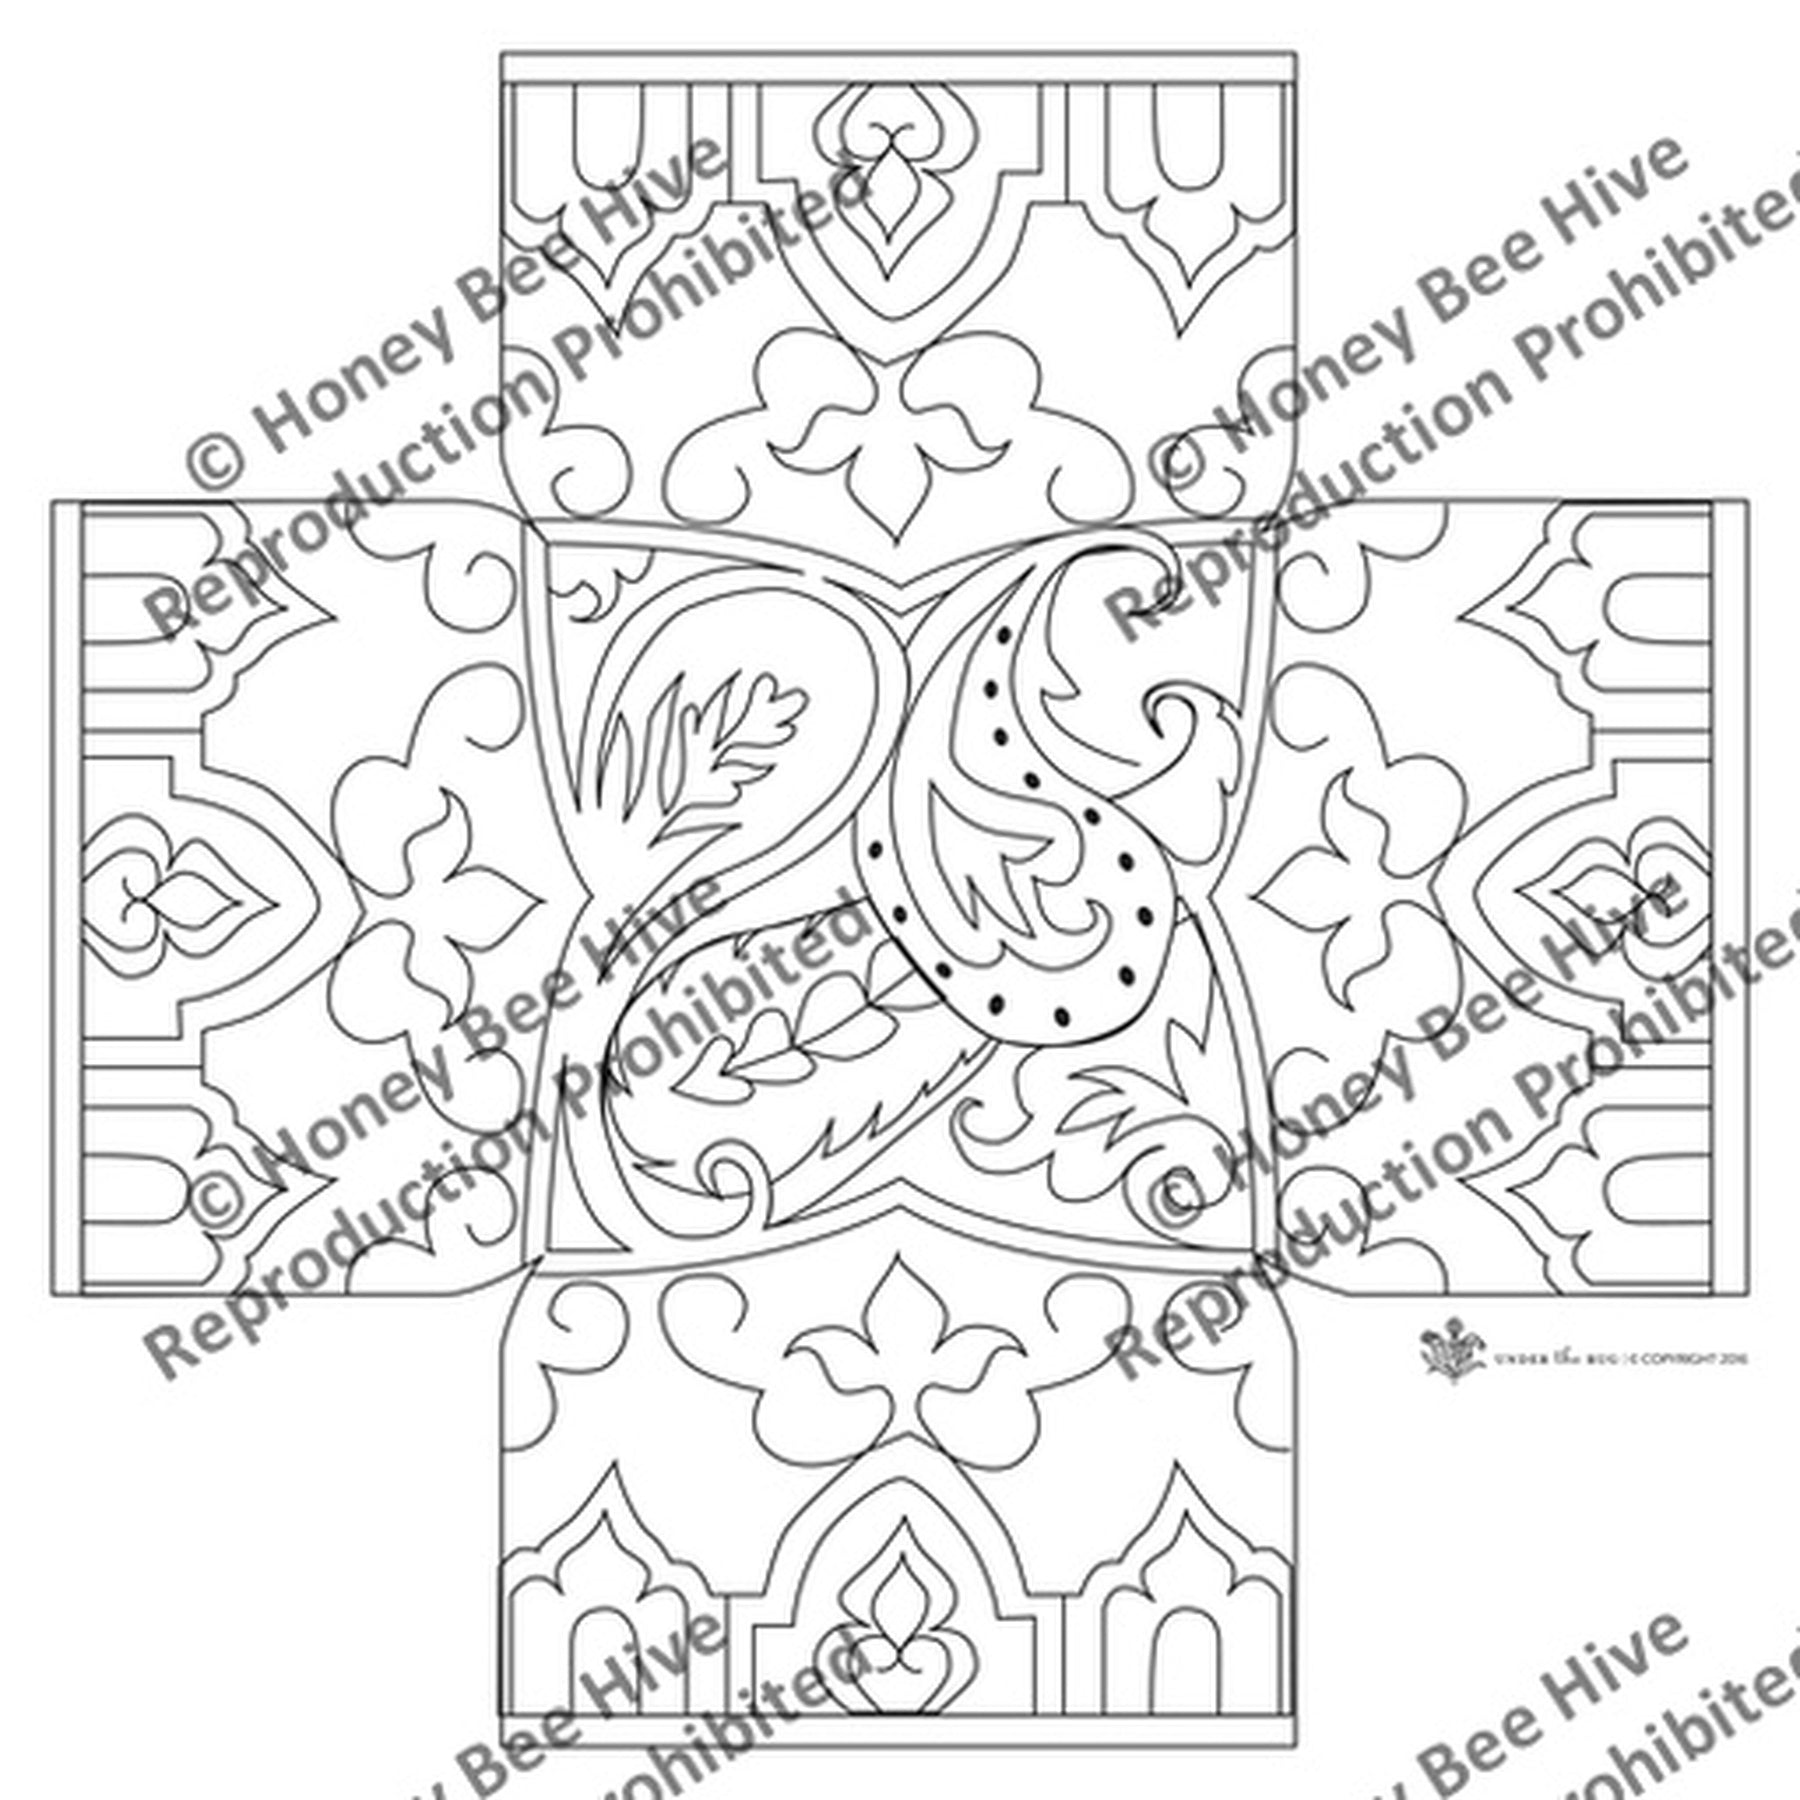 Paisley - Square Footstool Pattern, rug hooking pattern